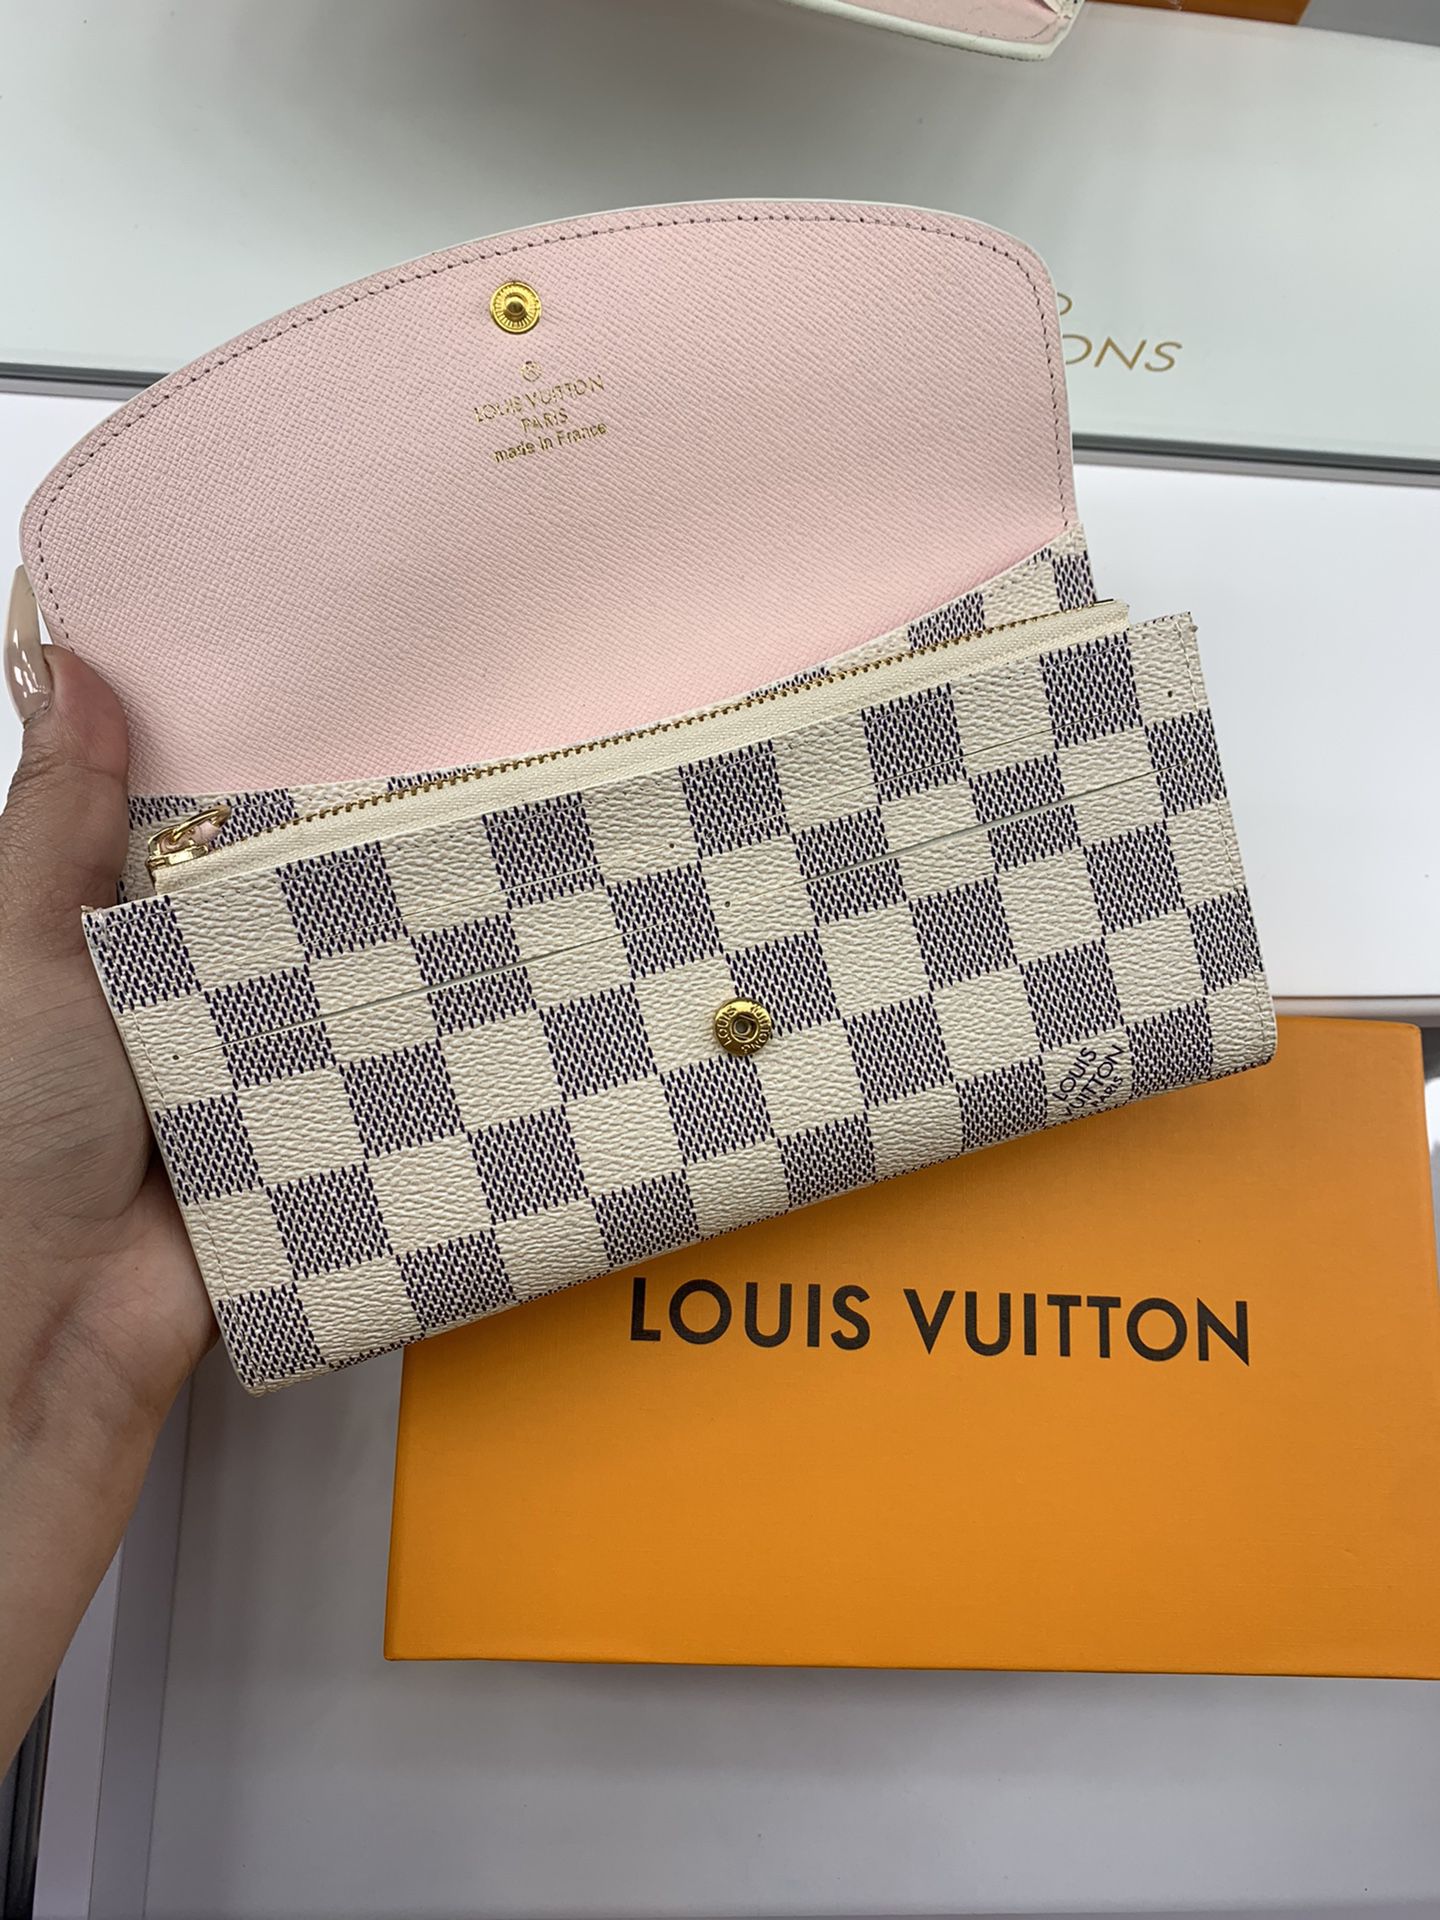 Louis Vuitton wallet pink loui